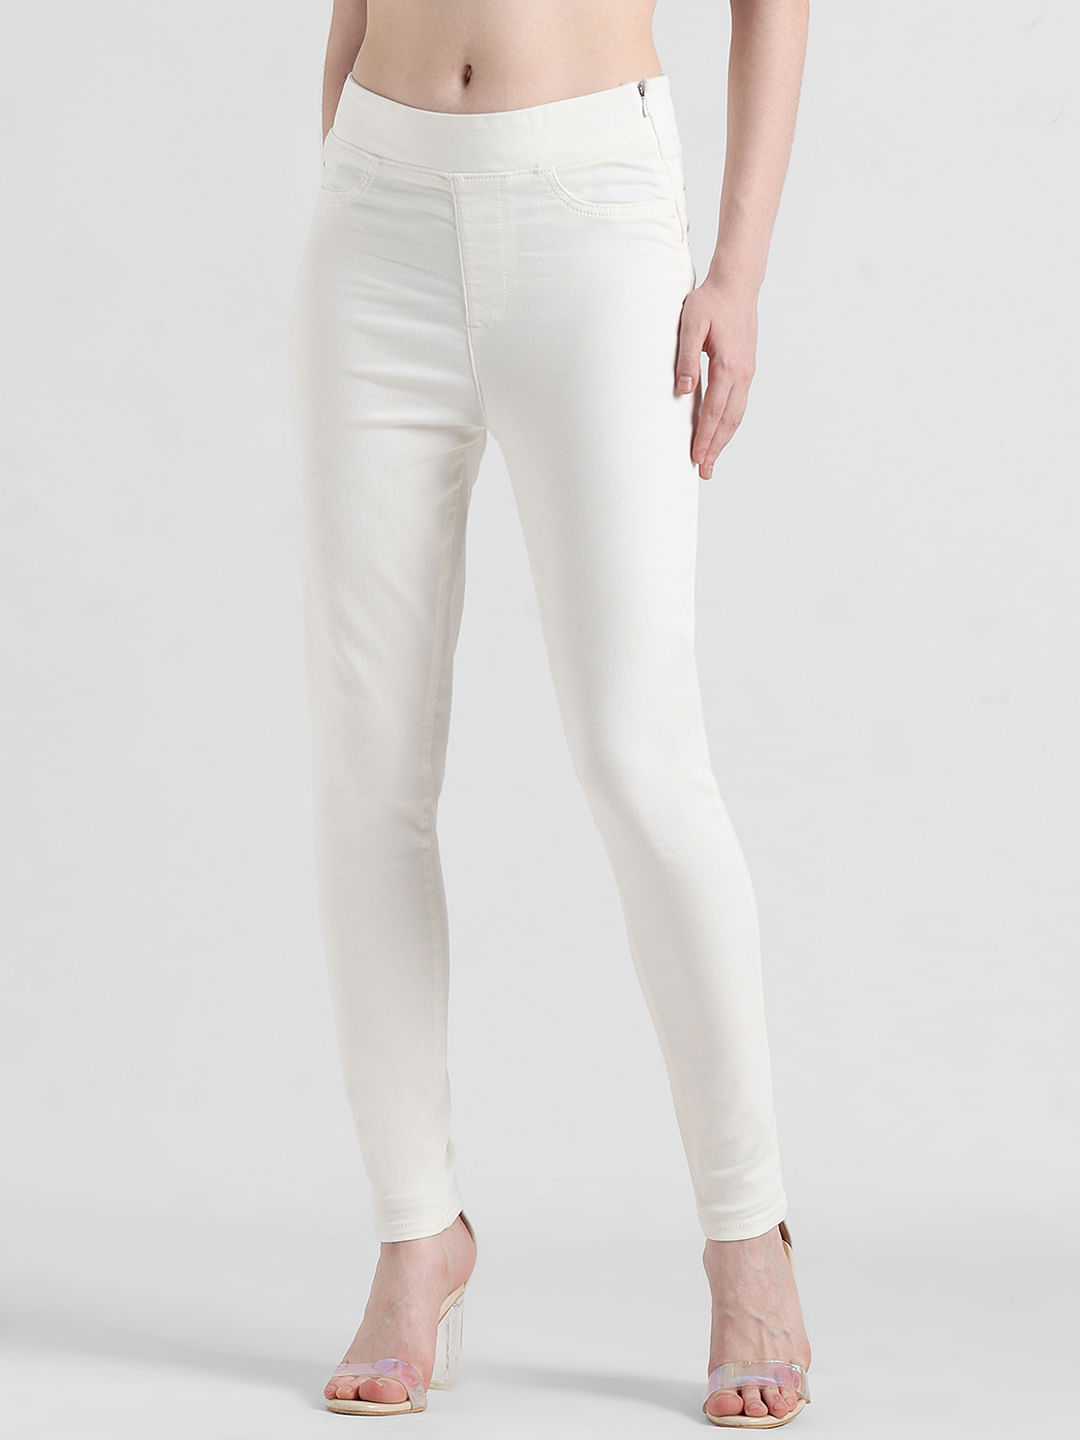 GSOON Slim Fit Men White Trousers - Buy GSOON Slim Fit Men White Trousers  Online at Best Prices in India | Flipkart.com